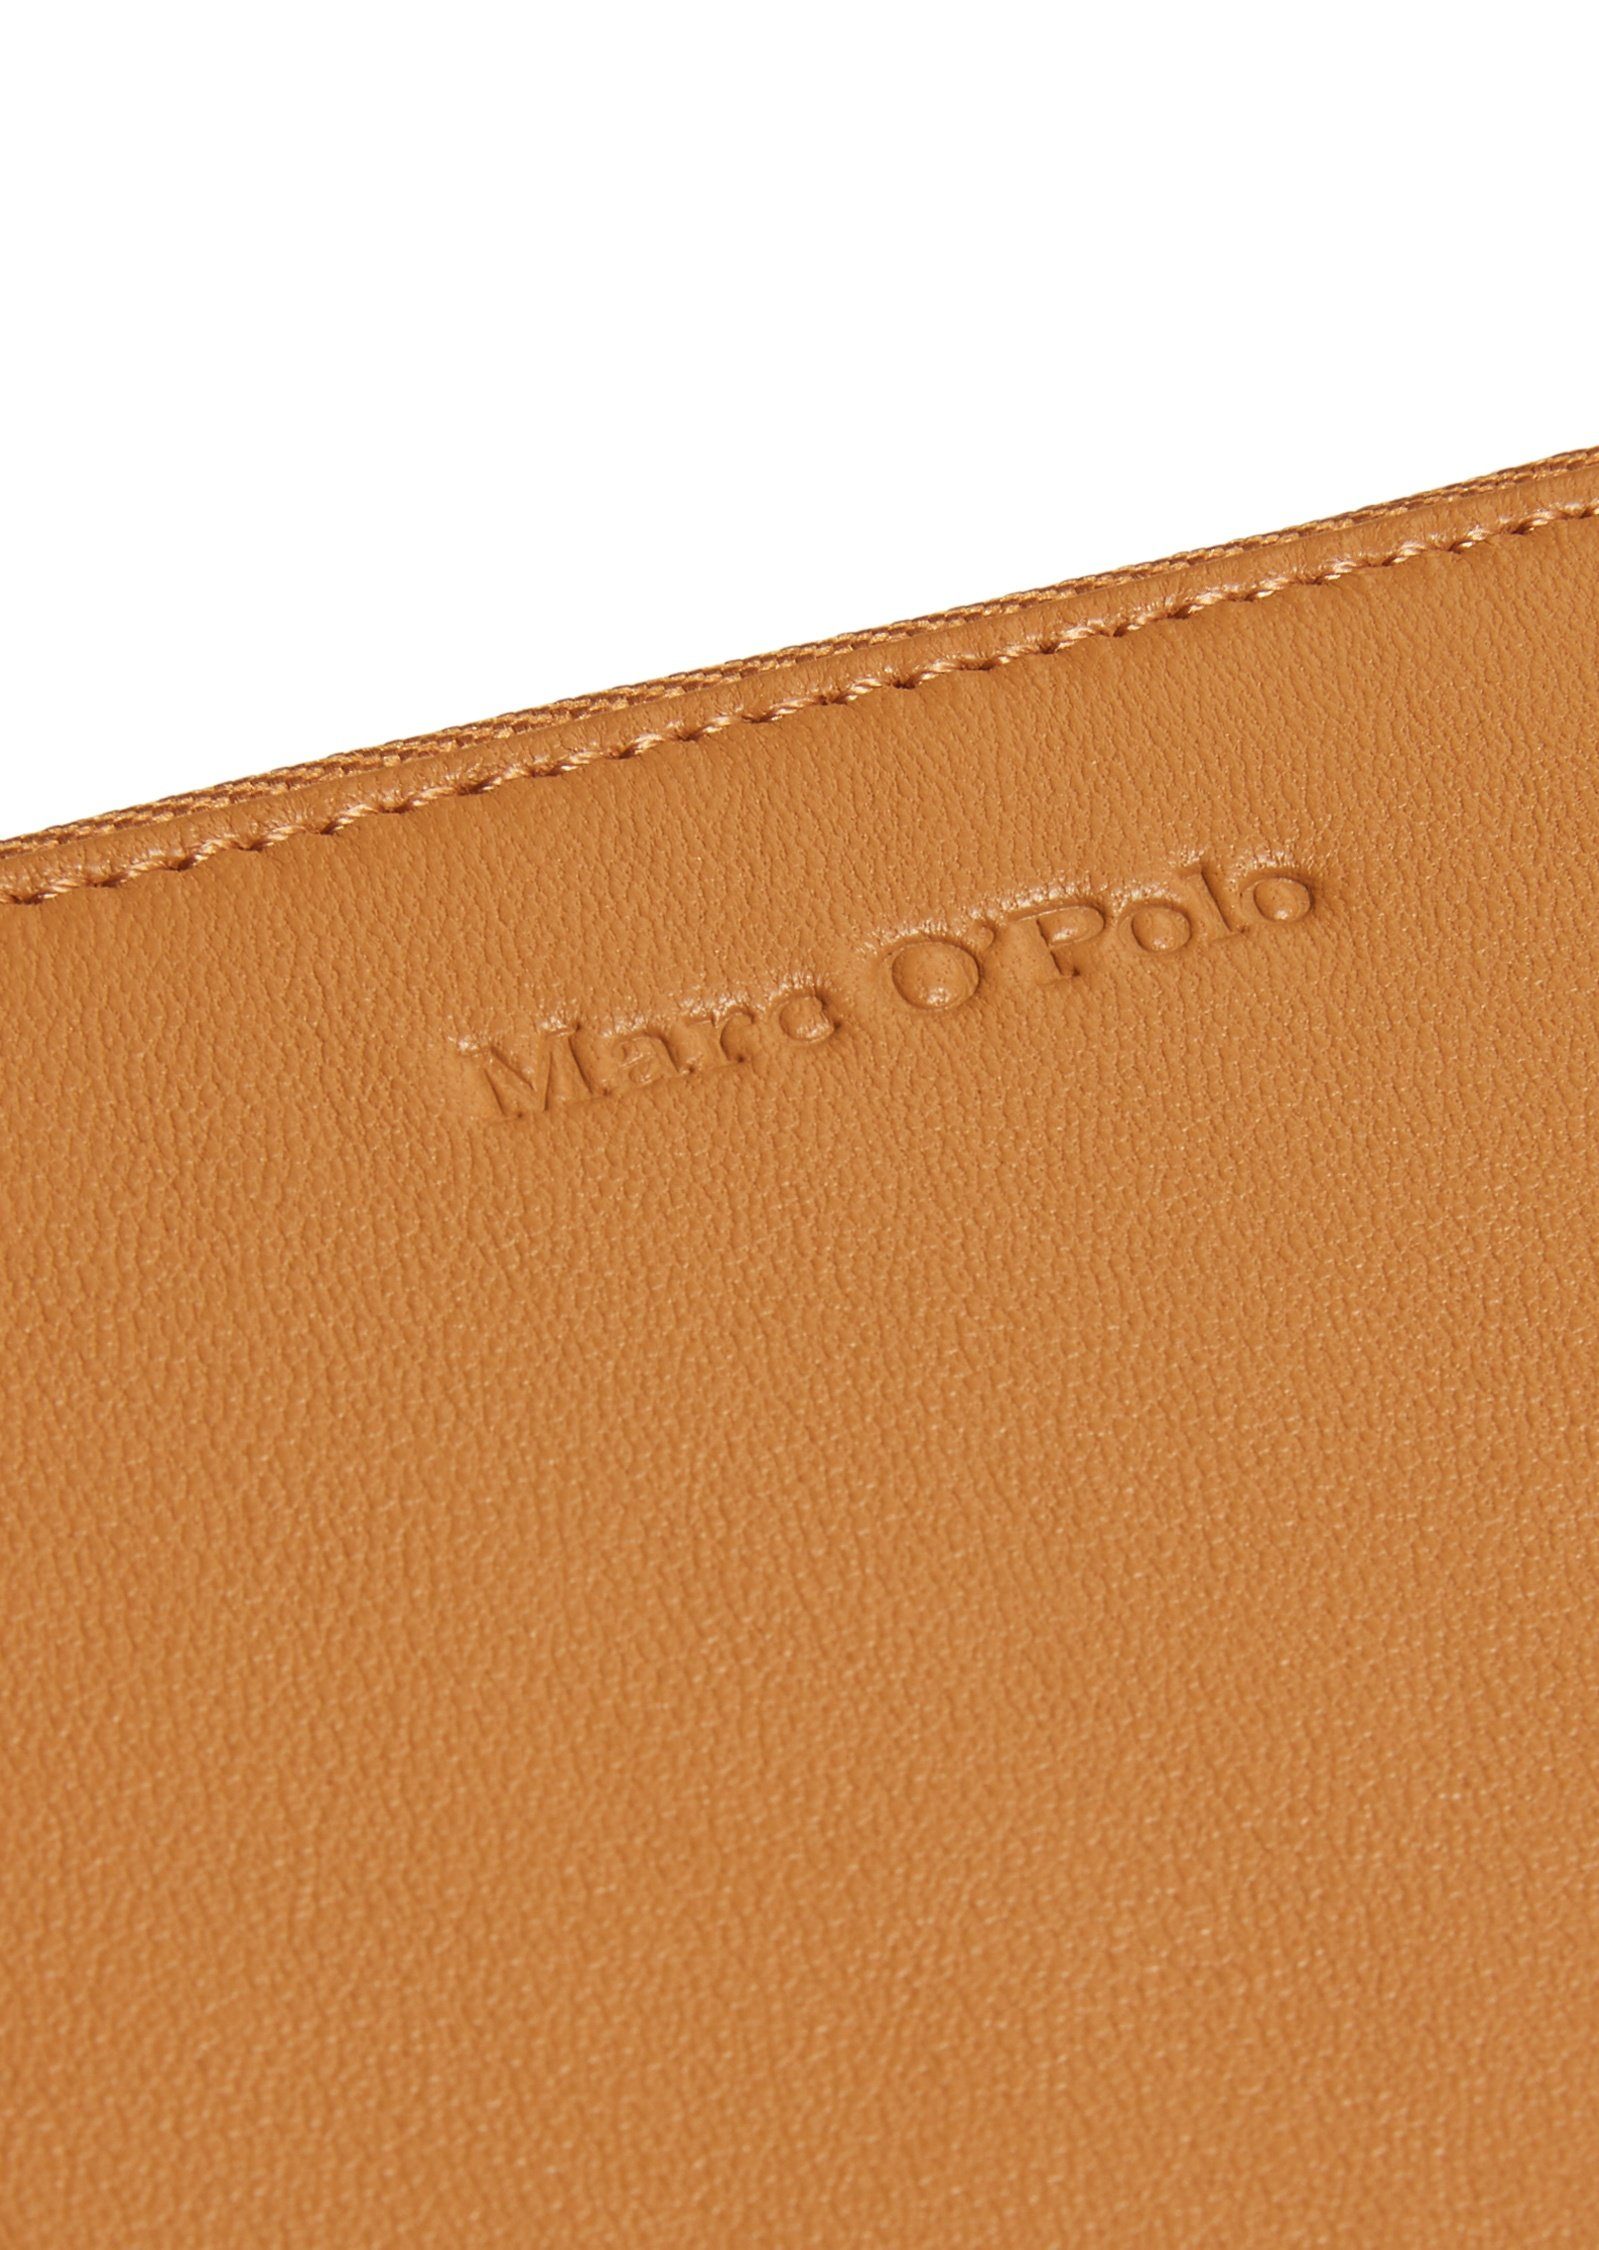 Marc O'Polo Geldbörse aus softem braun Leder